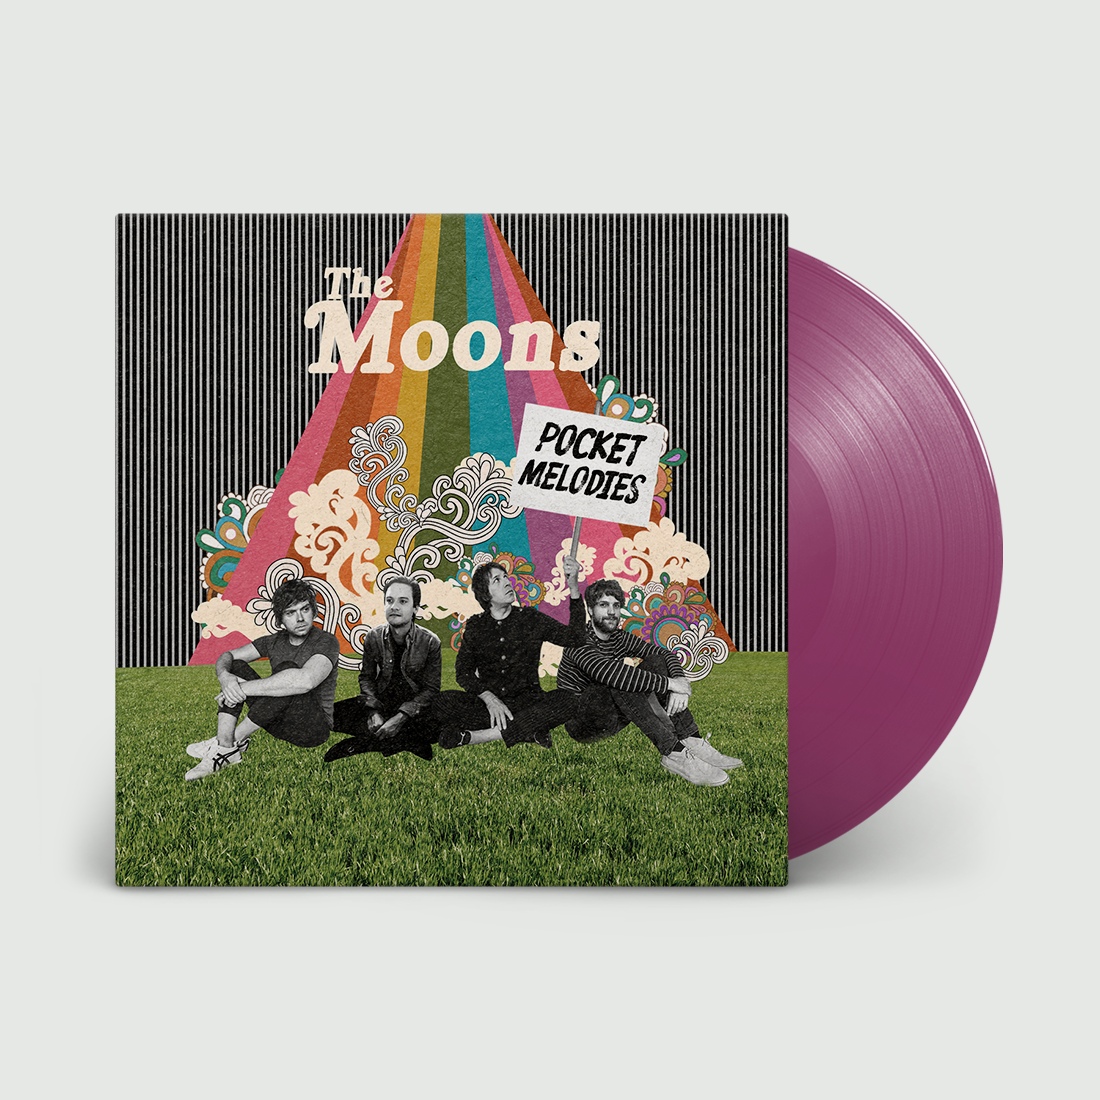 THE MOONS - Pocket Melodies - LP - Limited Purple Vinyl